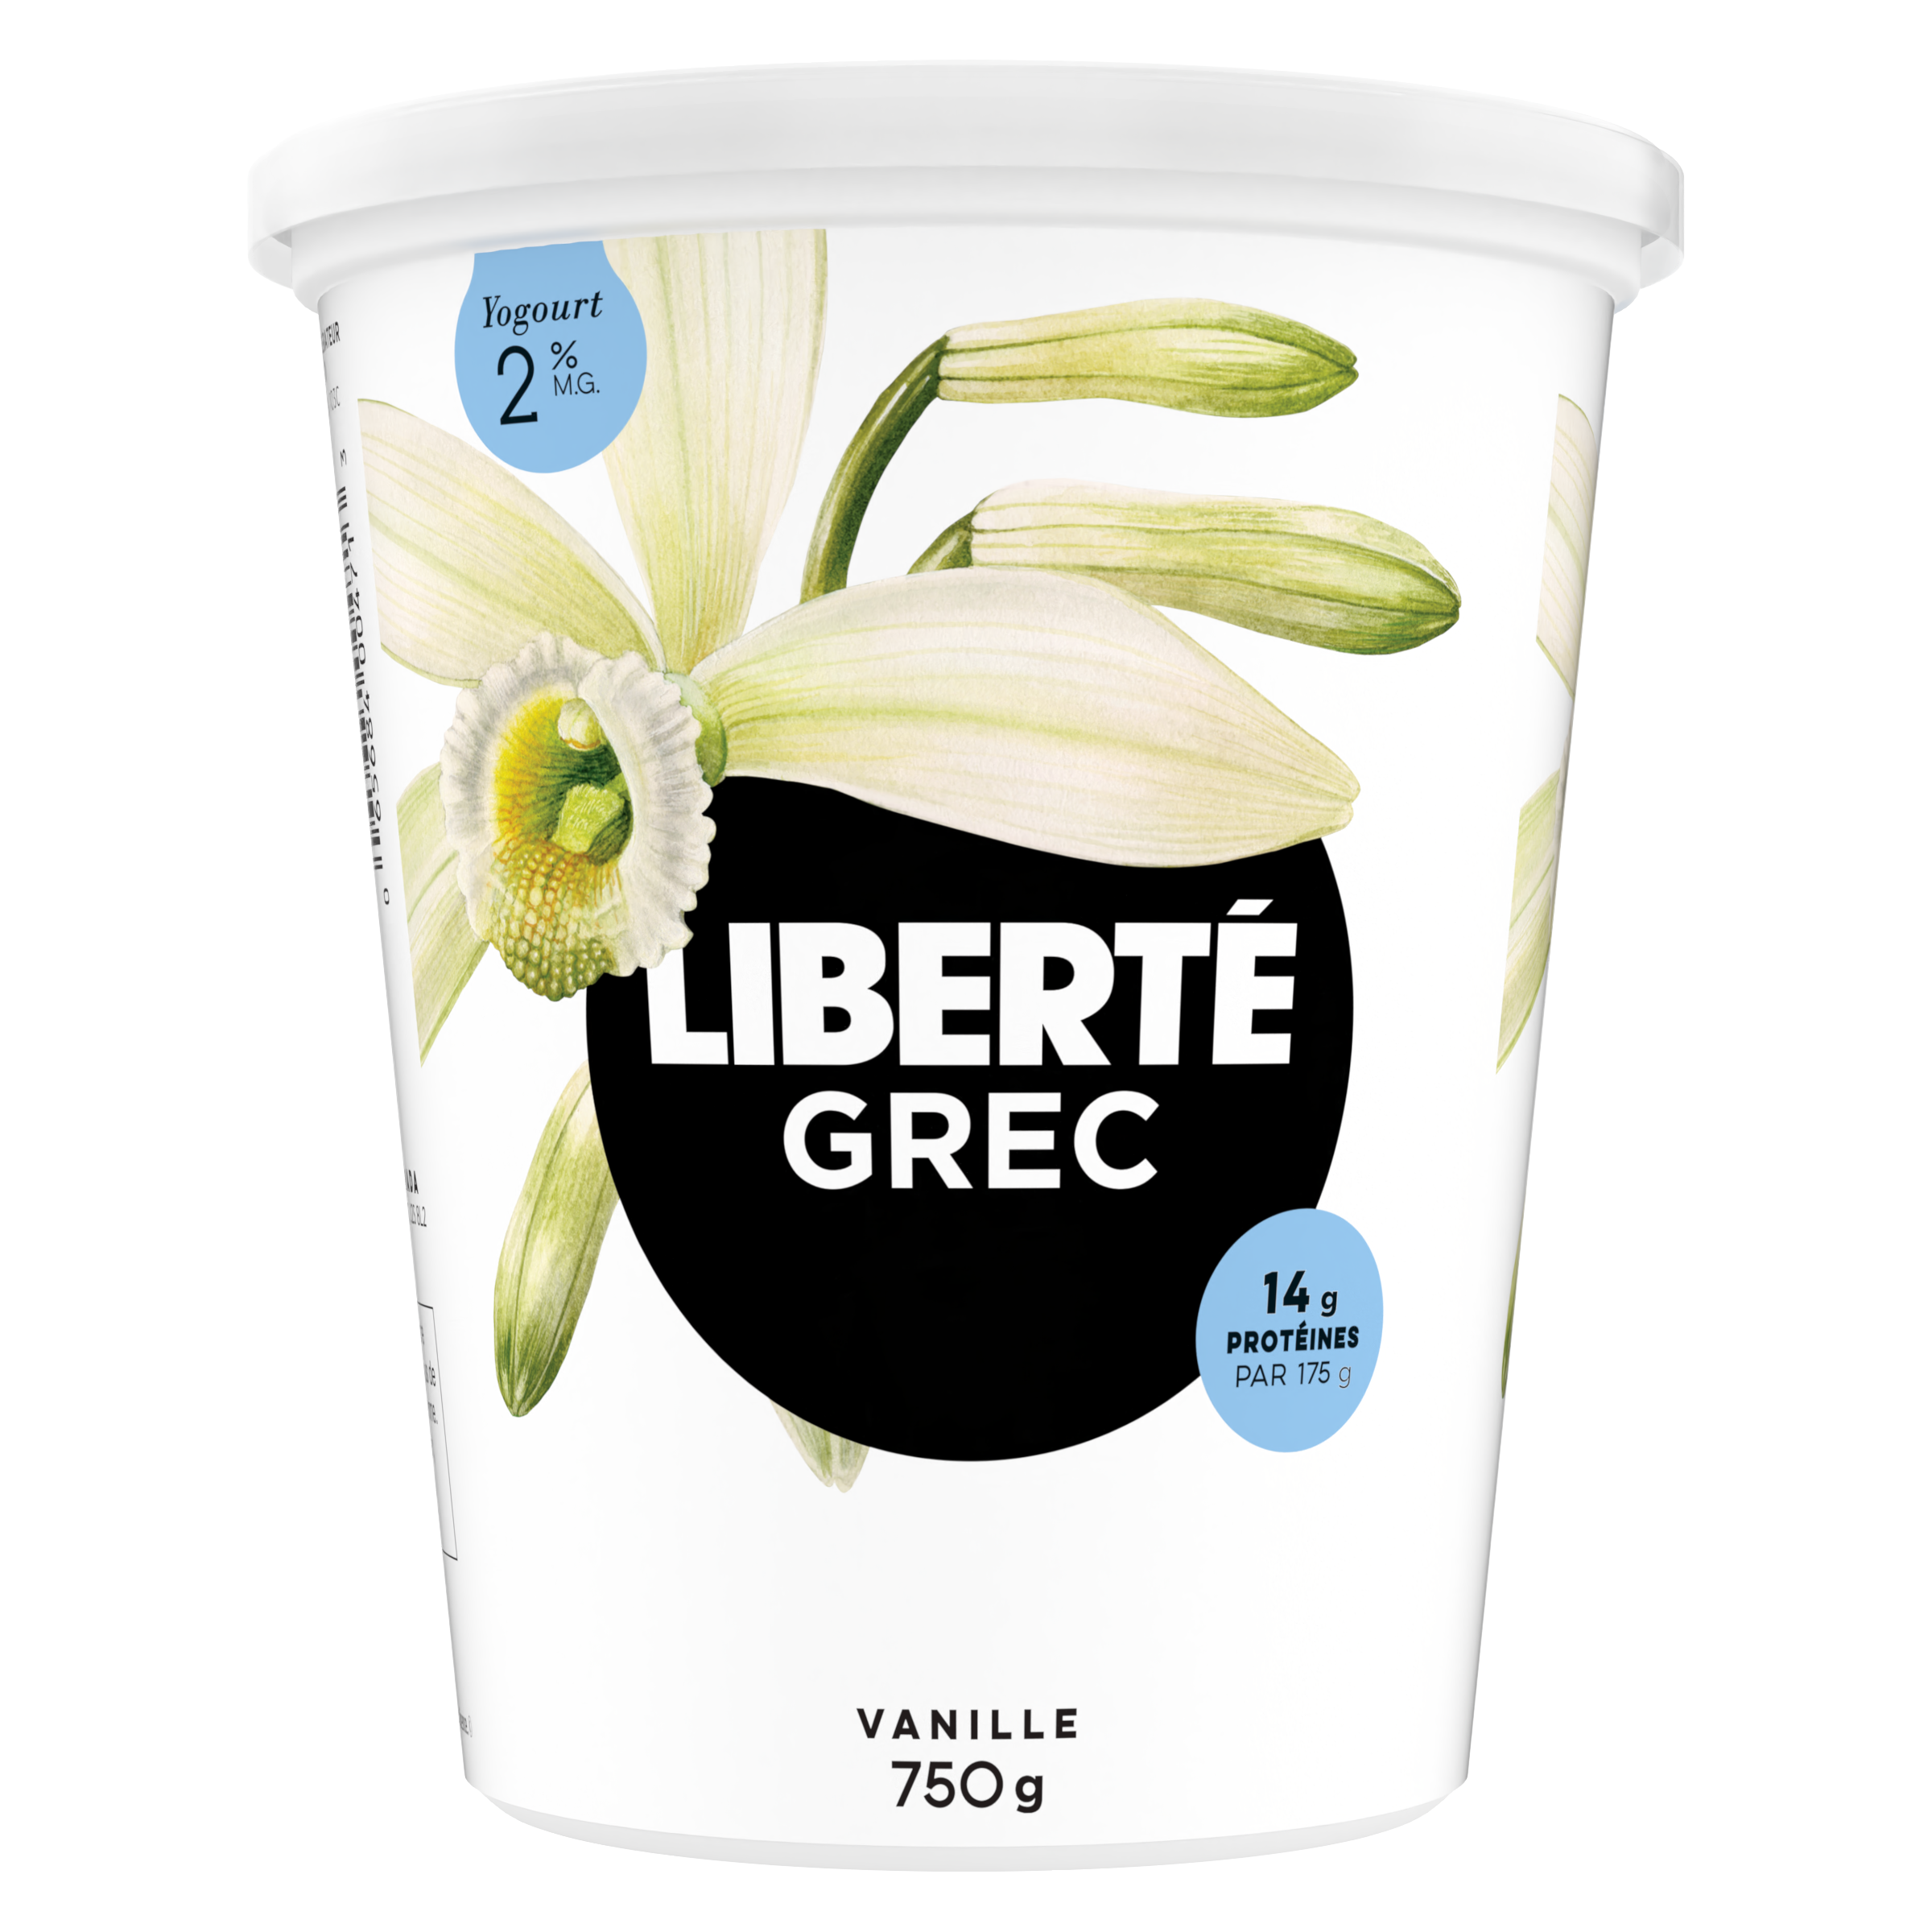 Liberté Grec vanille 2%